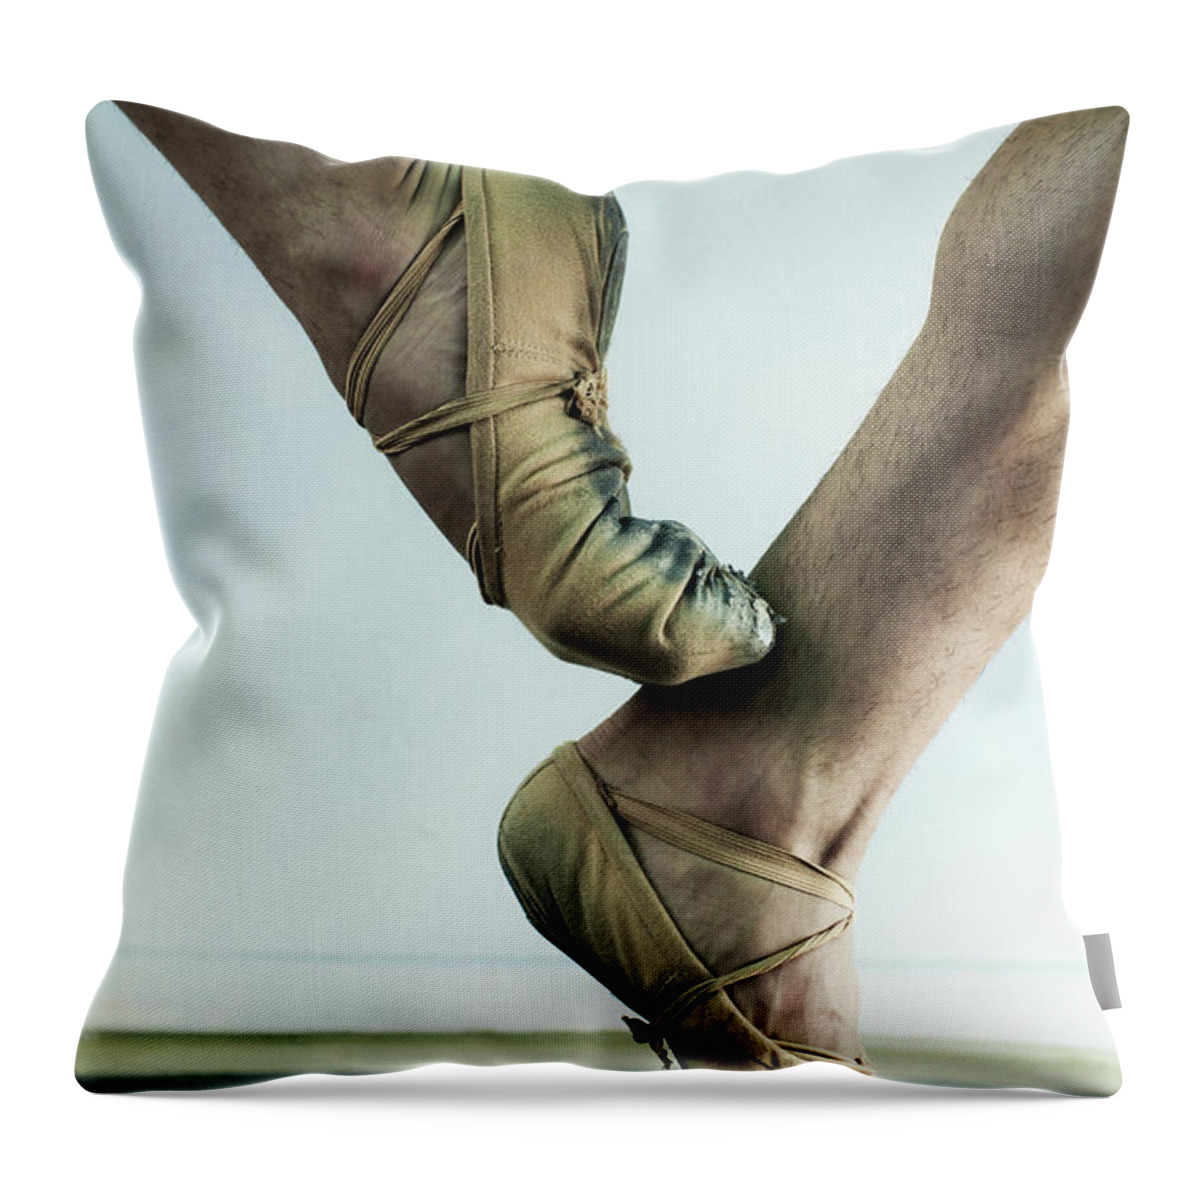 Ballet Dancer Throw Pillow featuring the photograph Male Ballet Dancer Balancing On Toe by Patrik Giardino